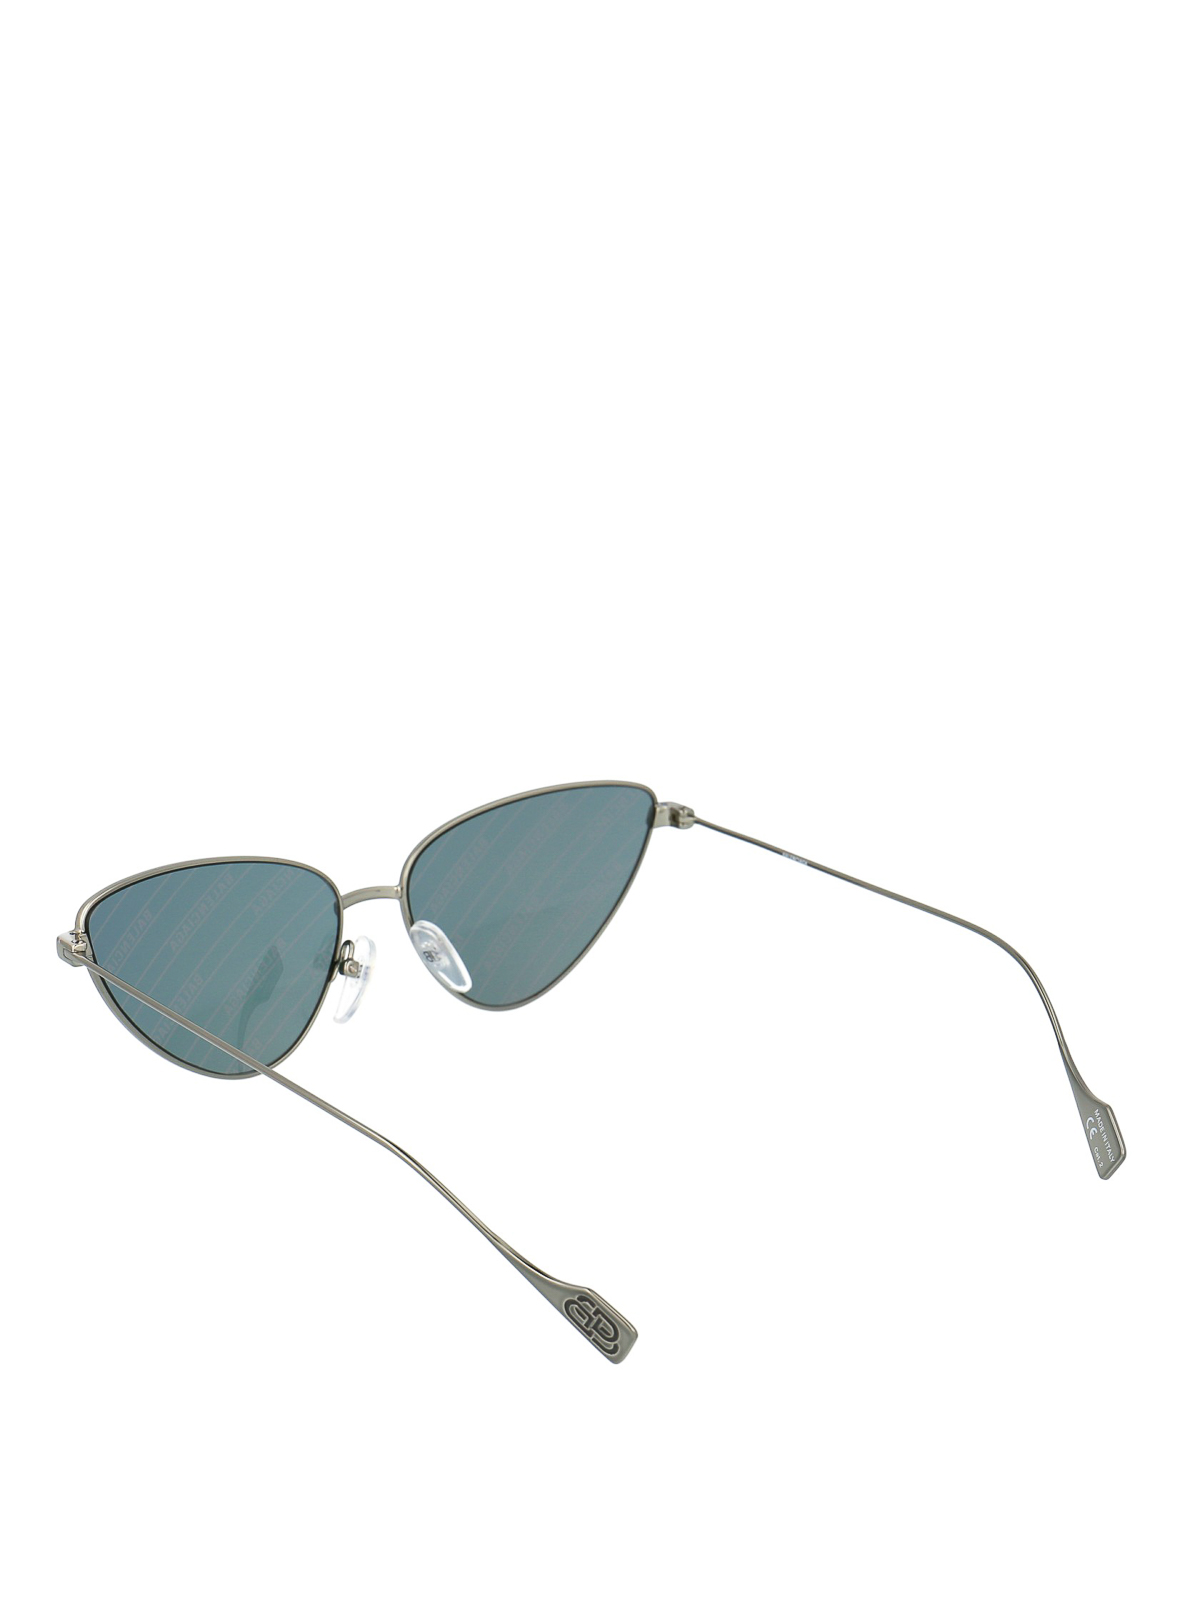 Sunglasses Balenciaga - Triangular - BB0086S006 | iKRIX.com